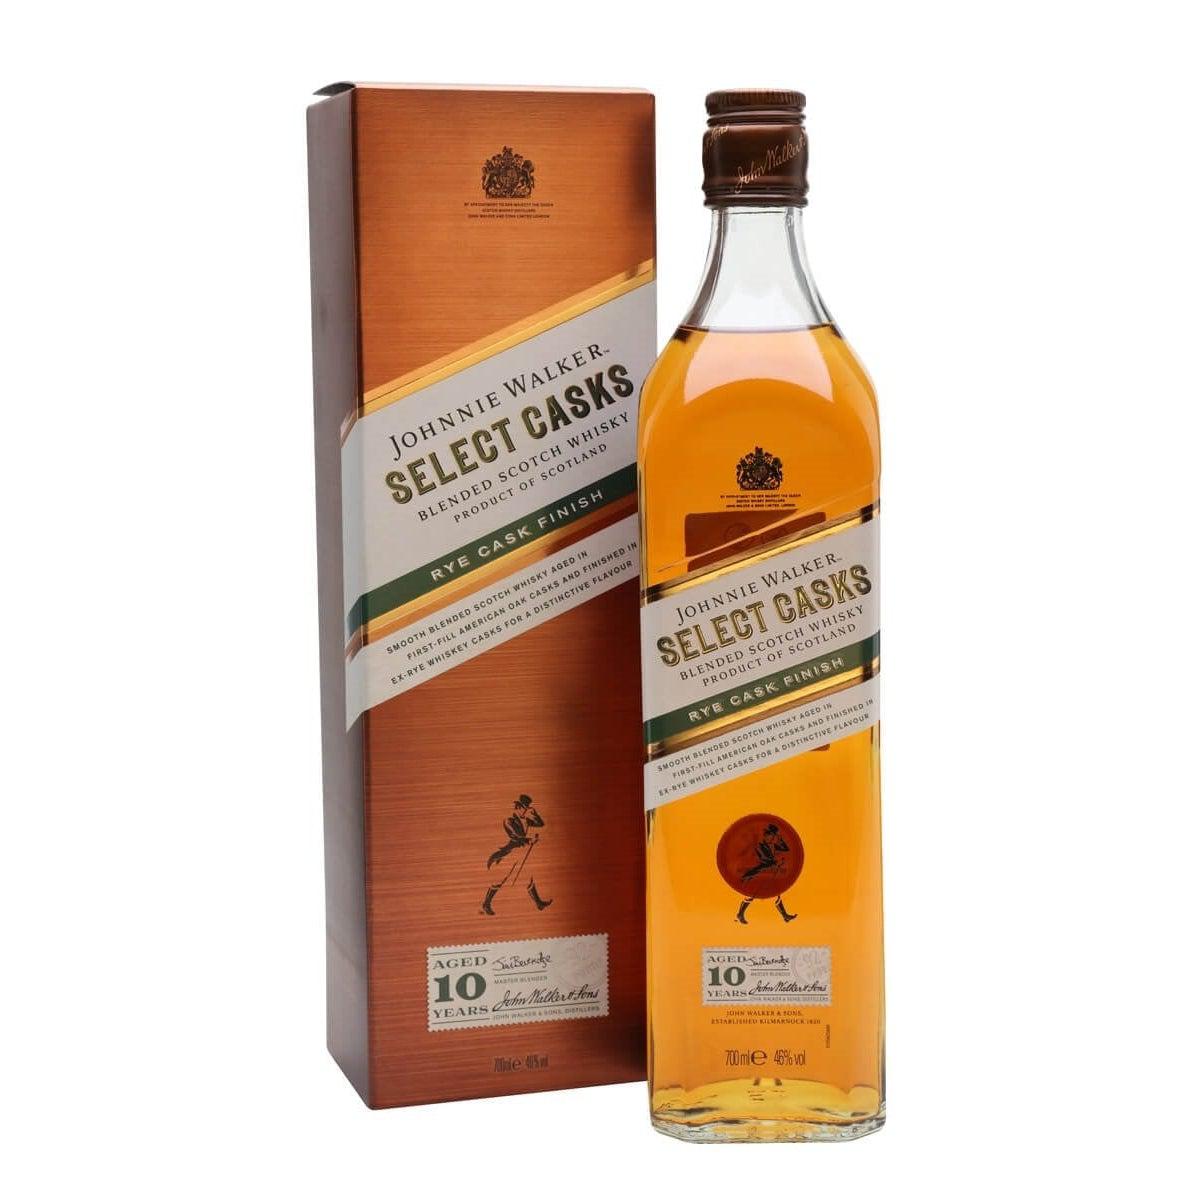 Johnnie Walker Select Casks Rye Cask Finish 10 Year Old Blended Scotch Whisky 700ml